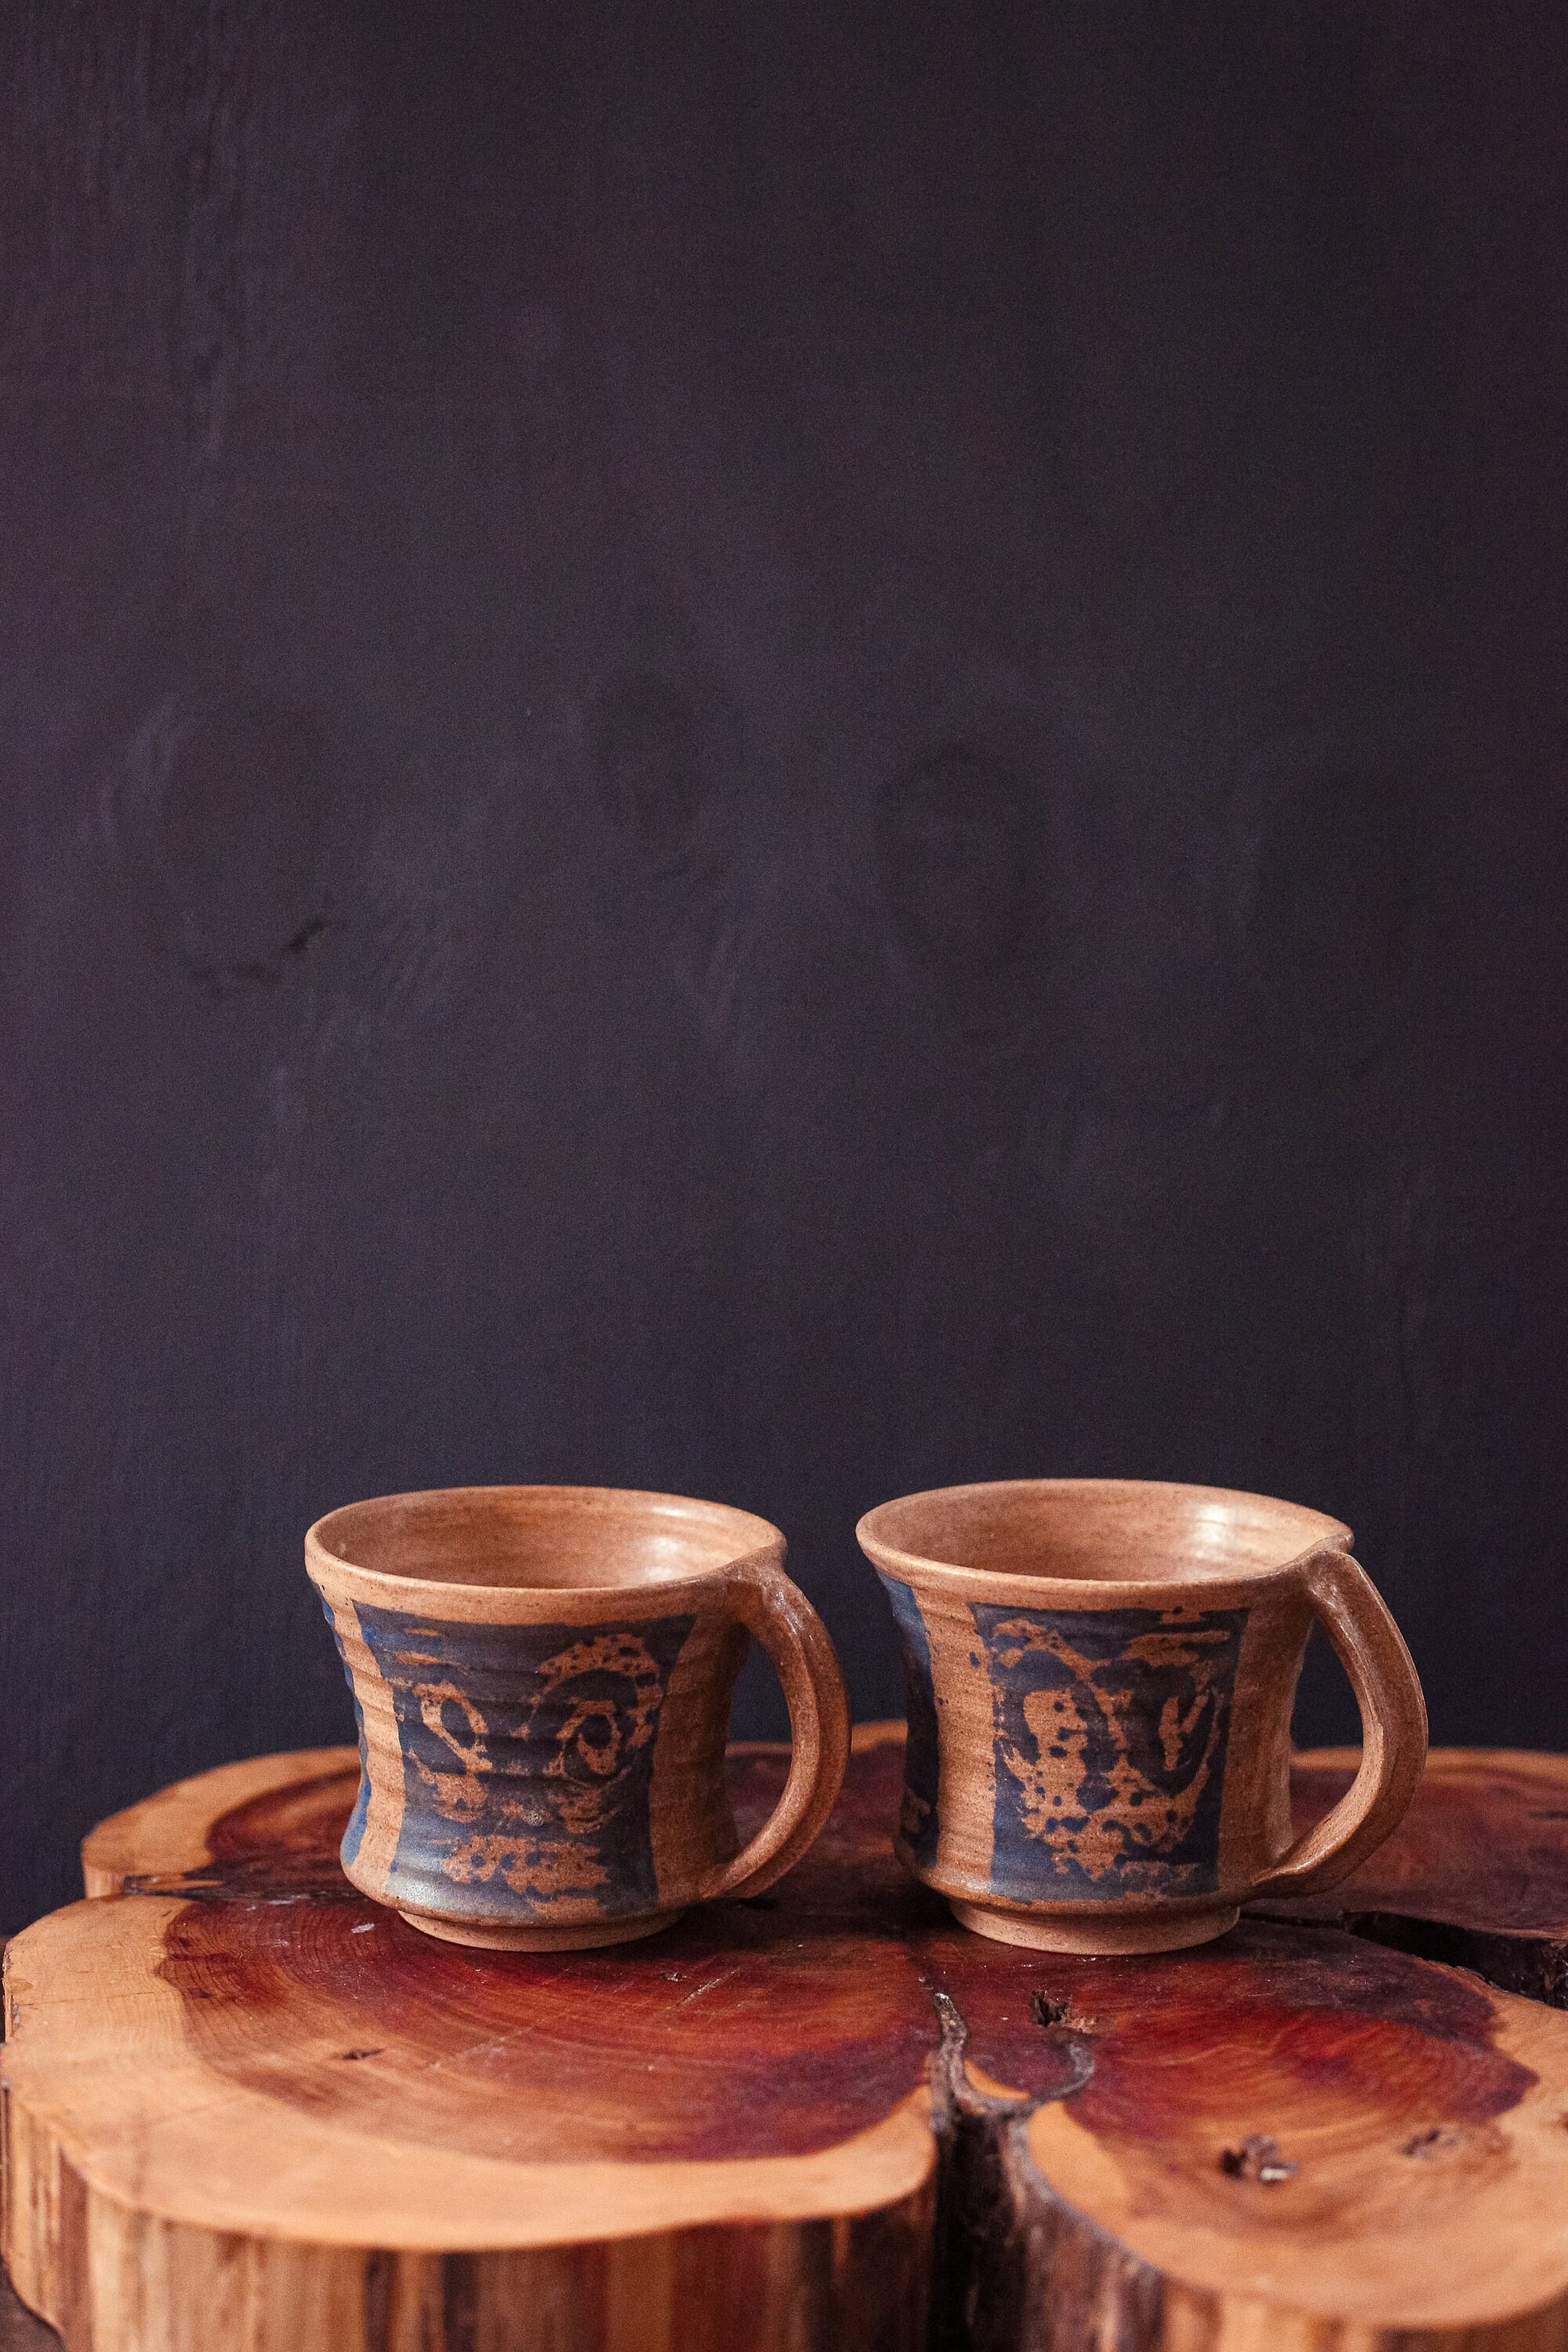 Pair of Studio Ceramic Mugs - Set of 2 Vintage Signed Studio Pottery